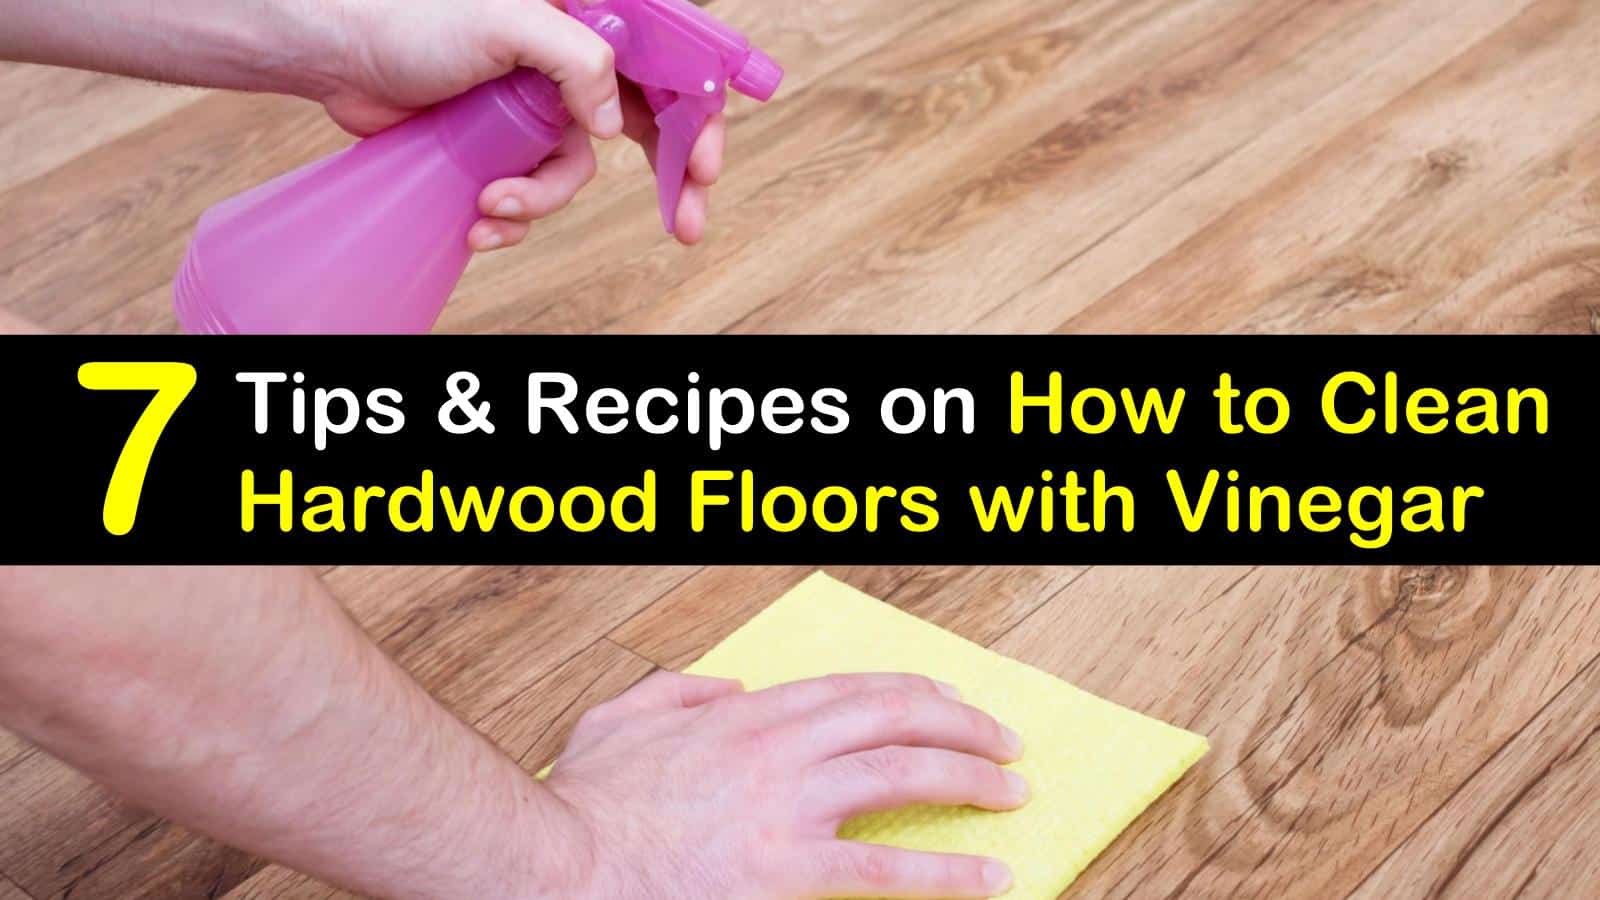 Clean Hardwood Floors With Vinegar, How Do You Disinfect Hardwood Floors